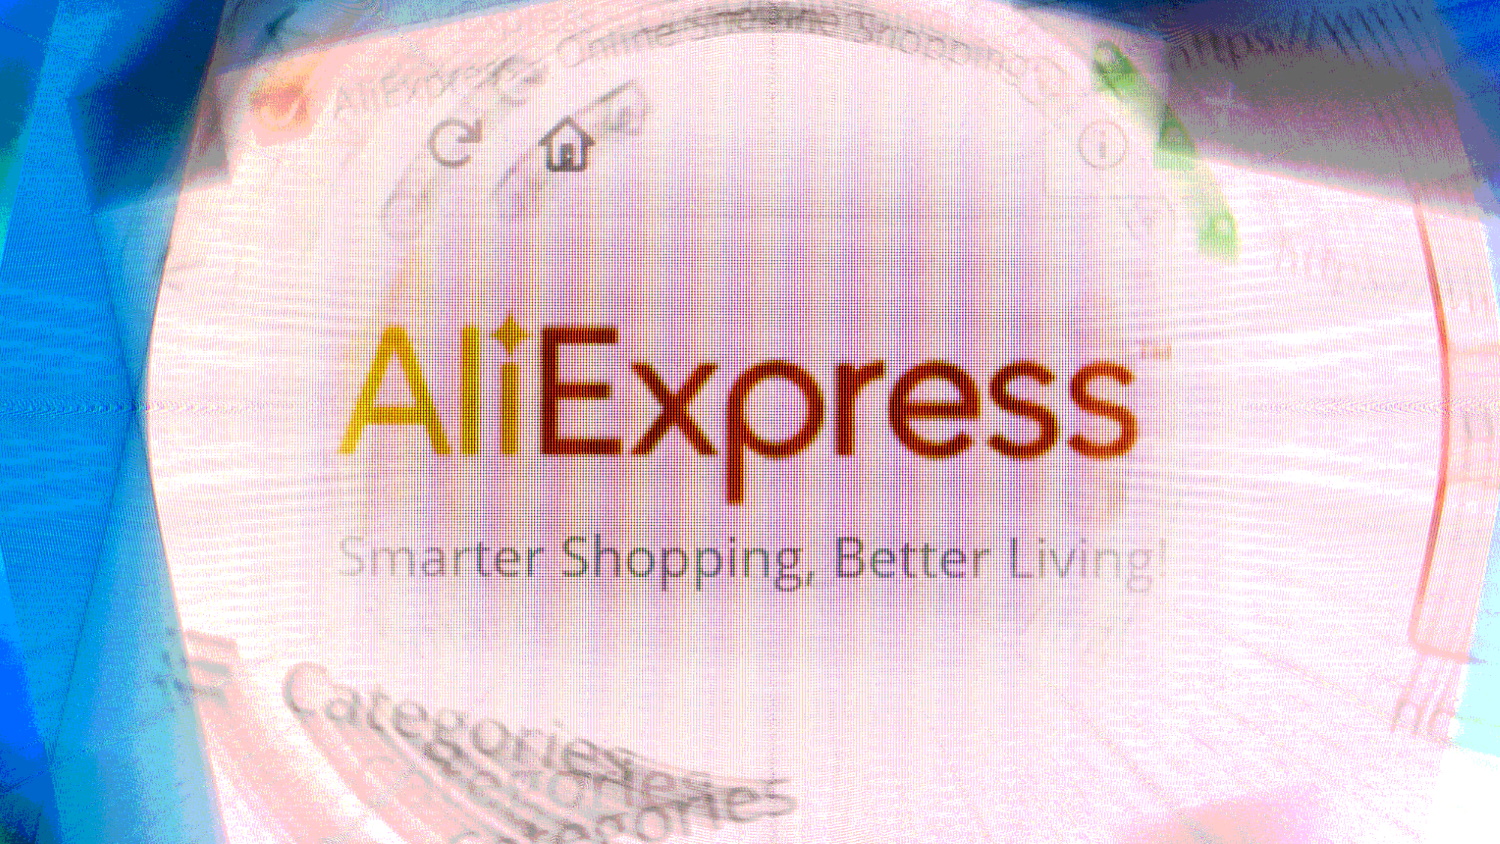 Aliexpress[